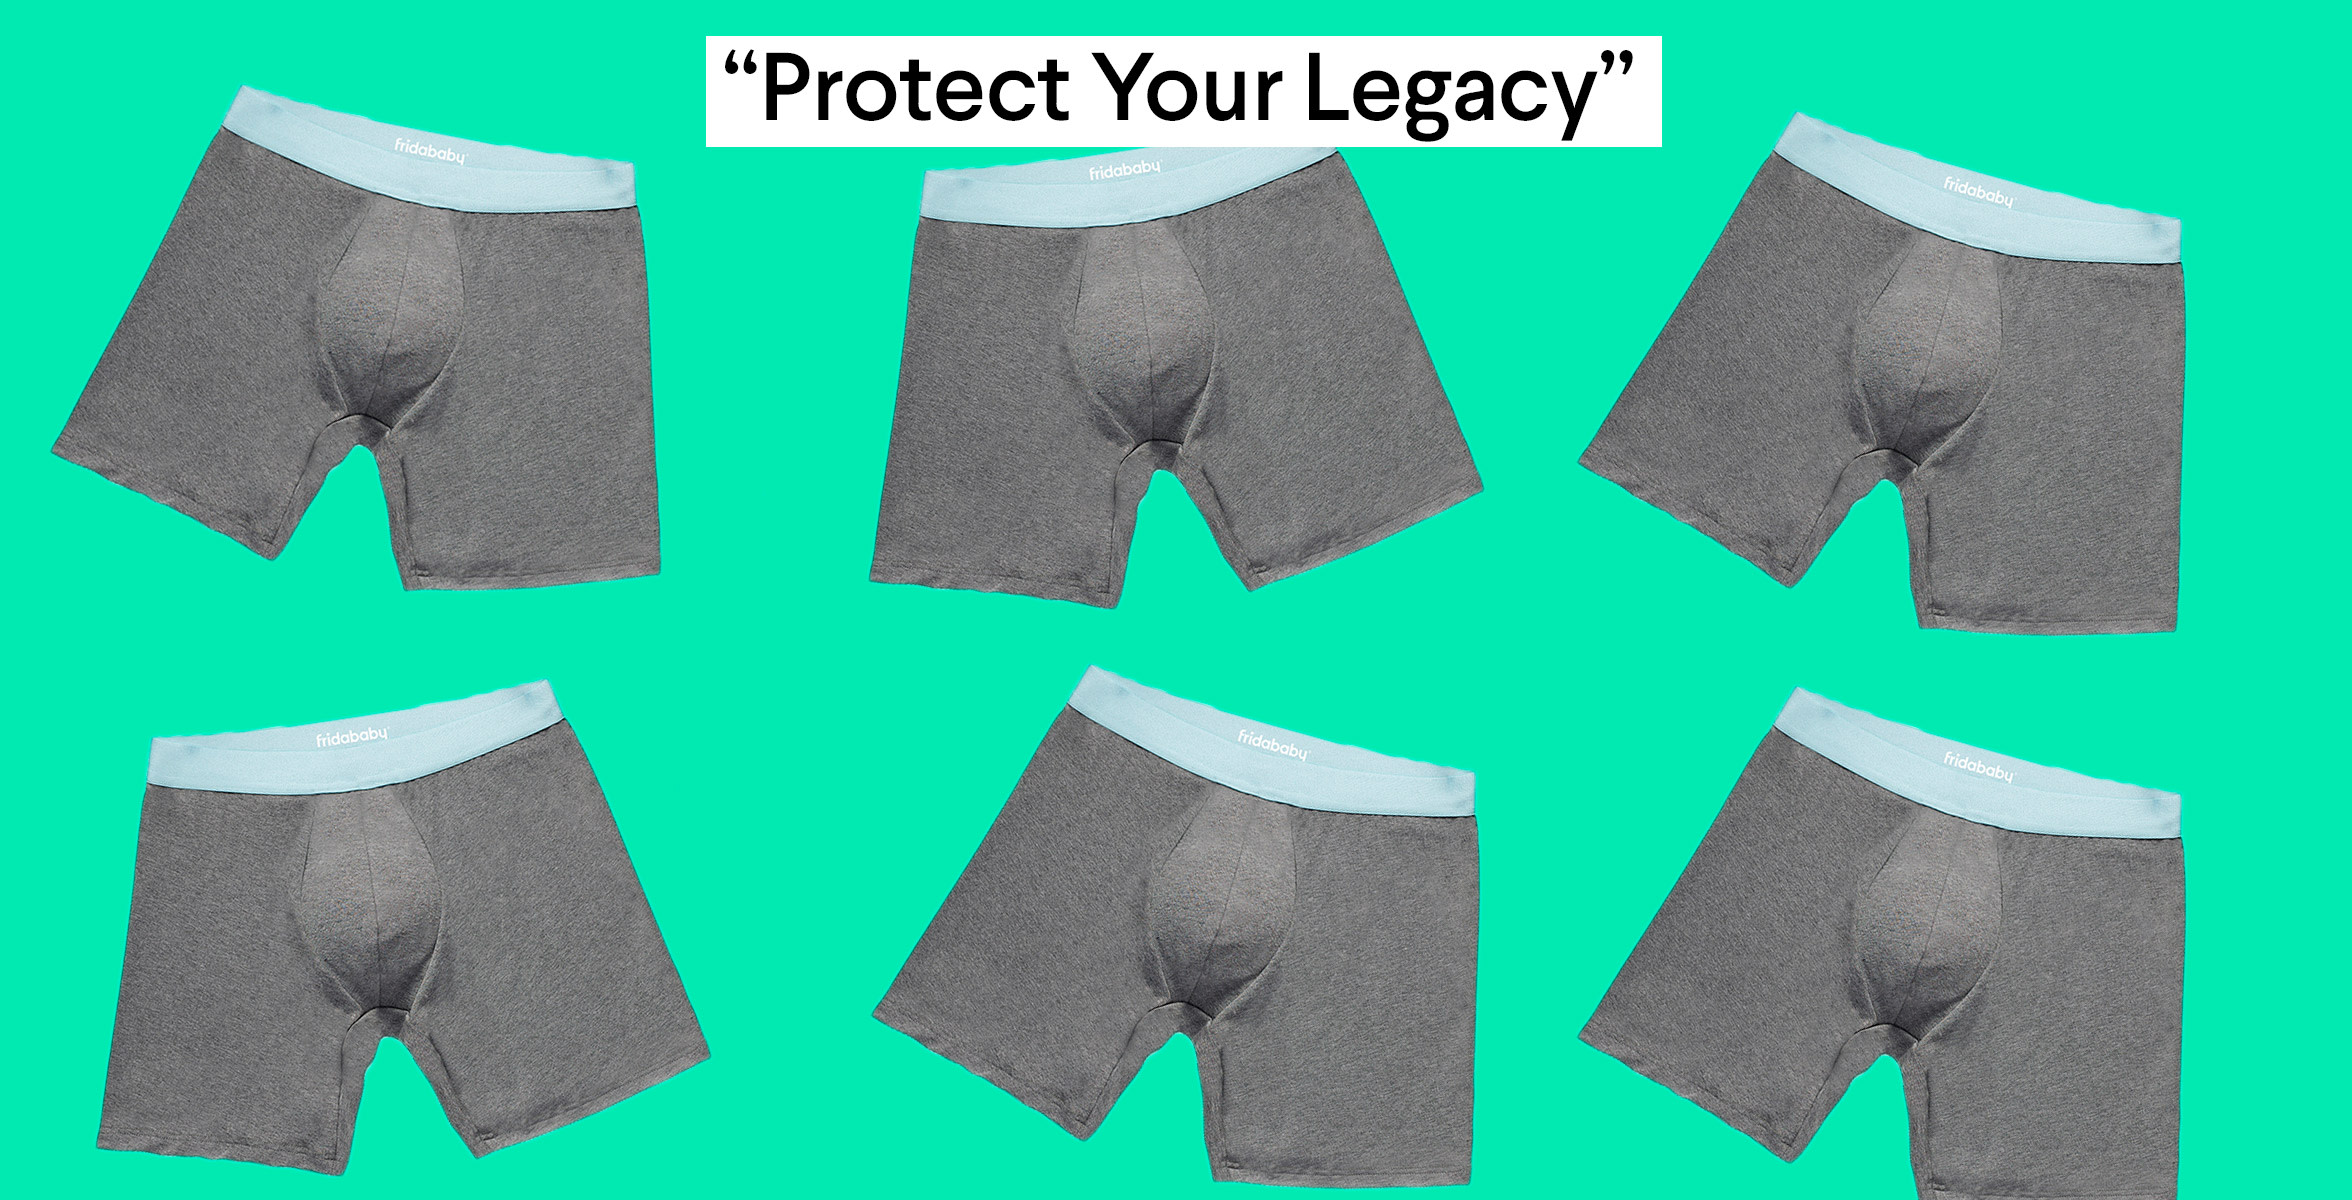 frida men's underwear helps protect against baby kicking